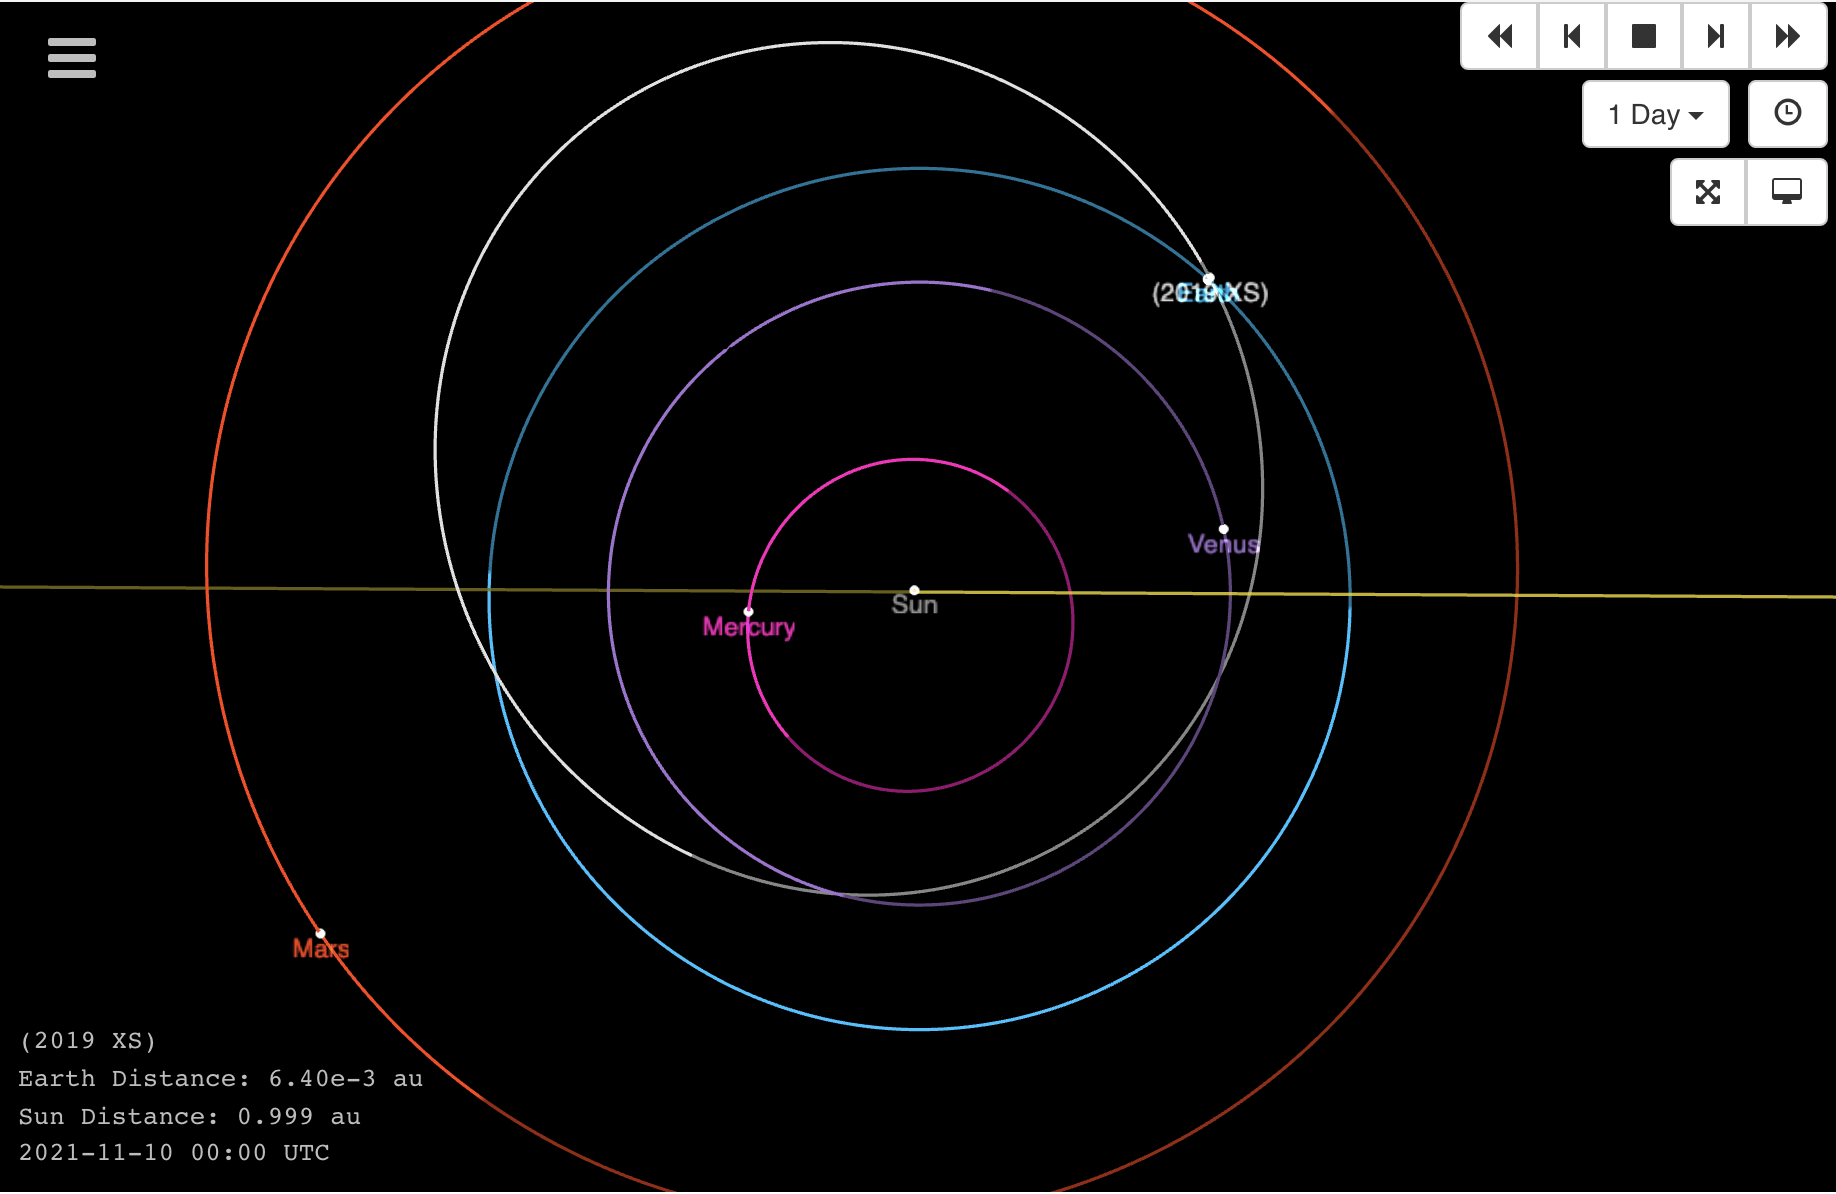 View of 2019 XS' entire orbit.